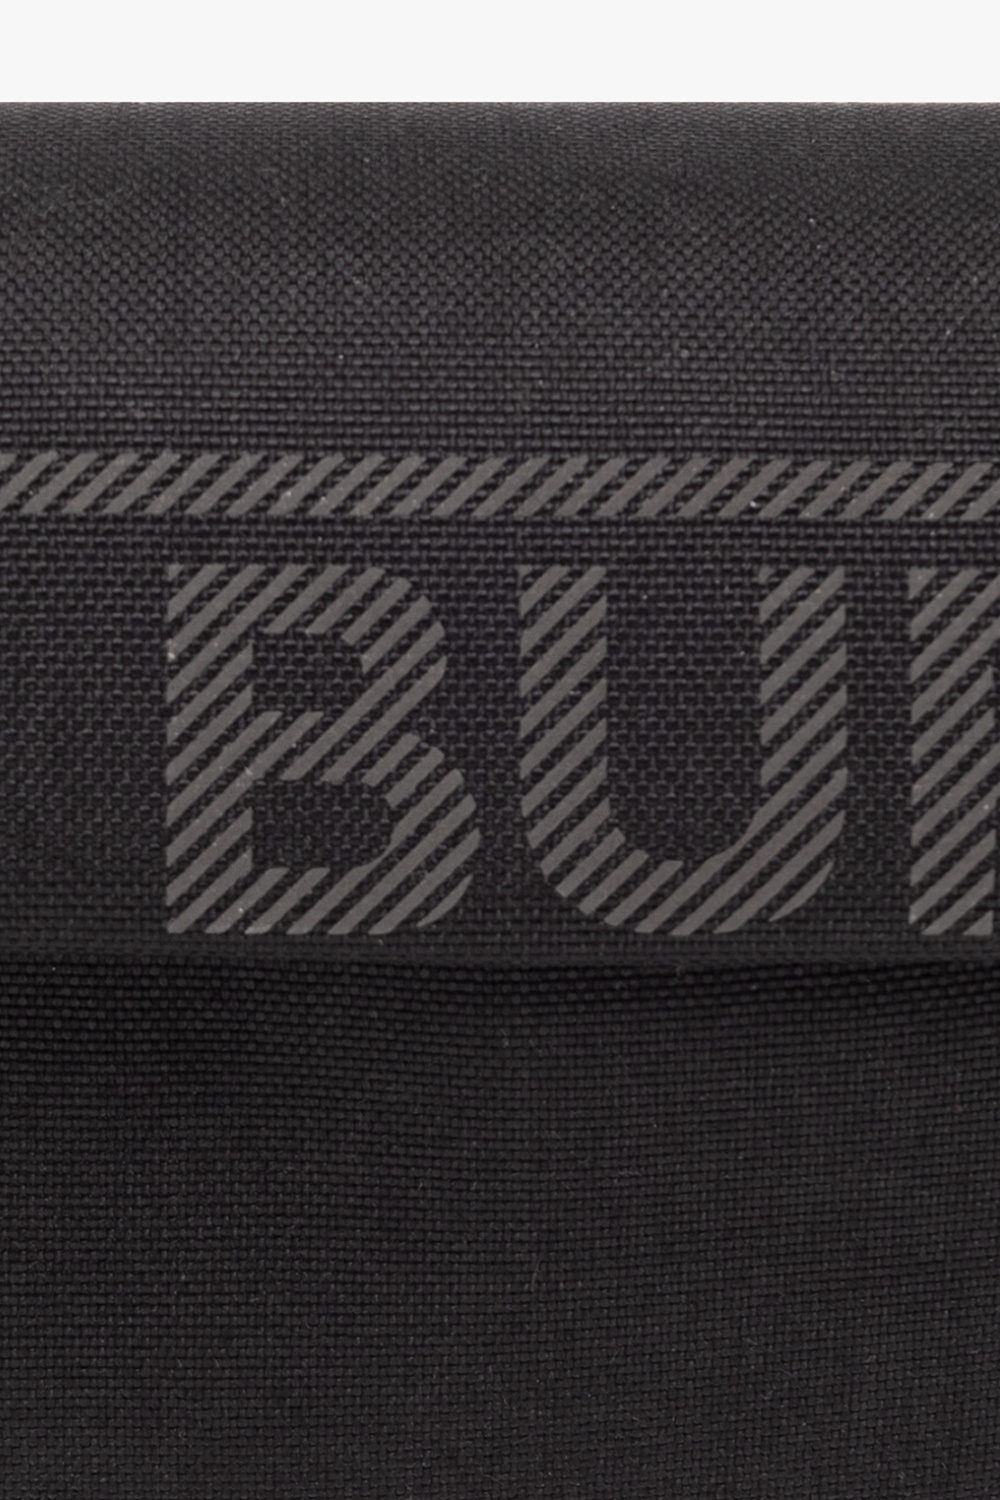 Burberry ‘Sonny Medium’ belt bag